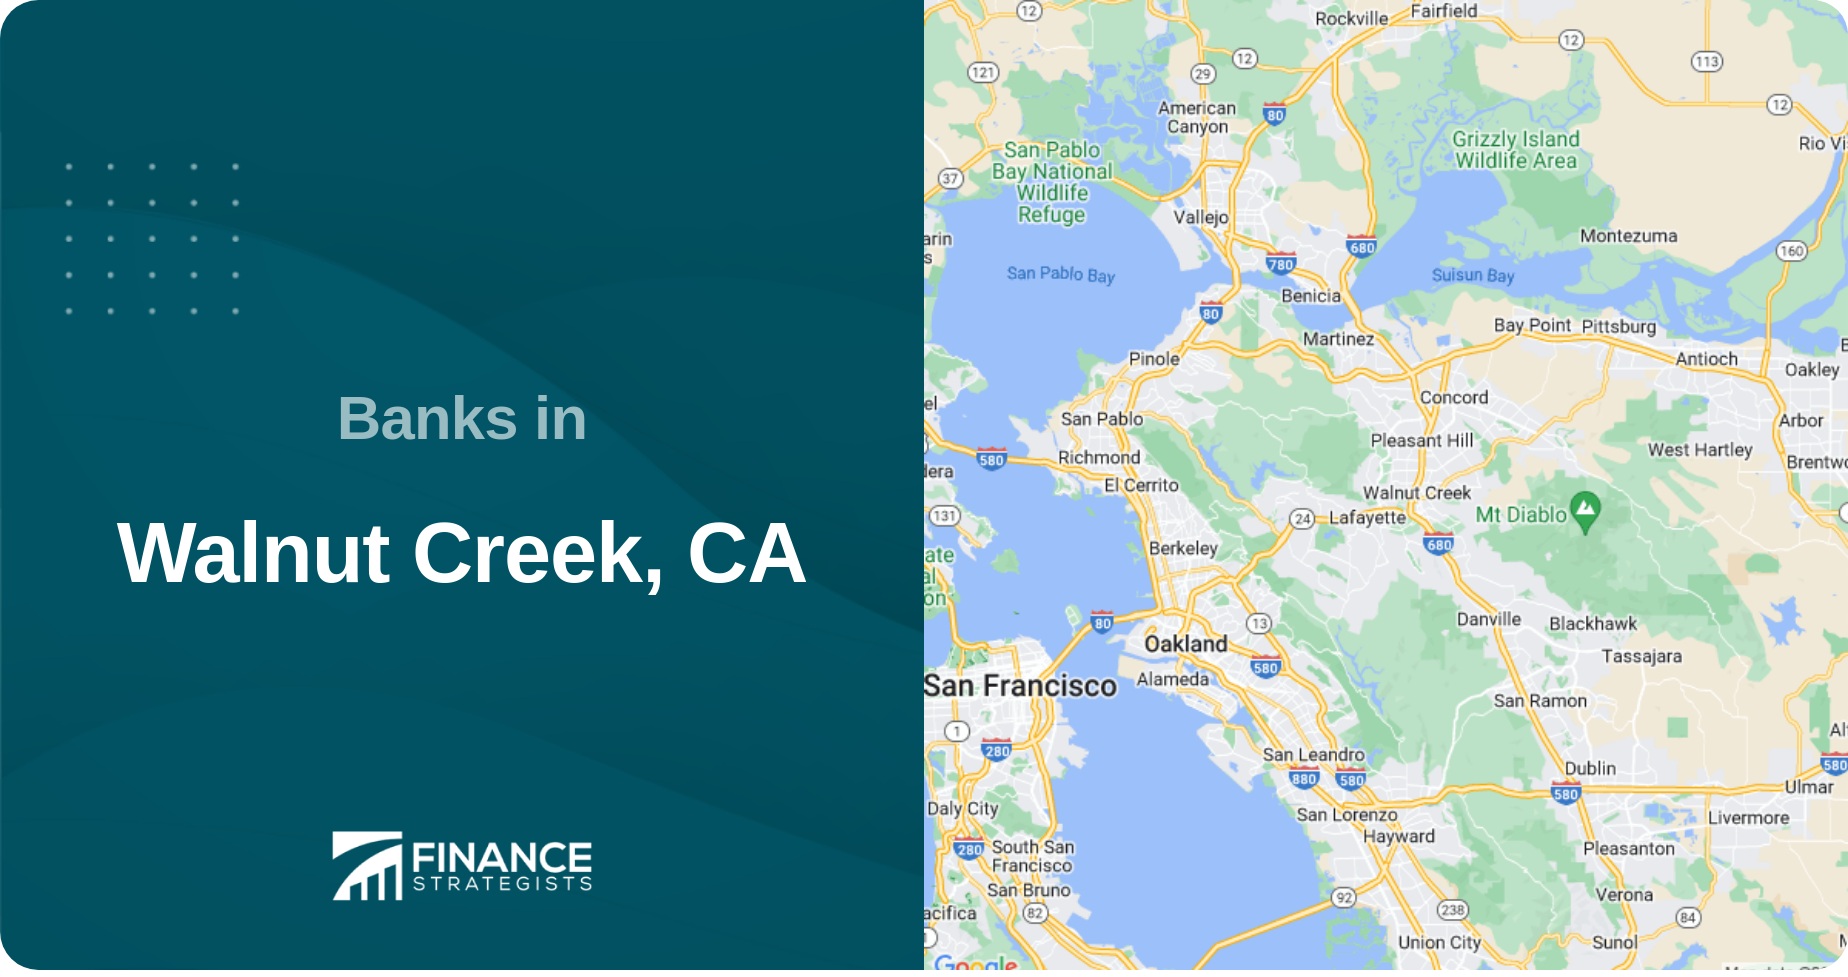 Banks in Walnut Creek, CA